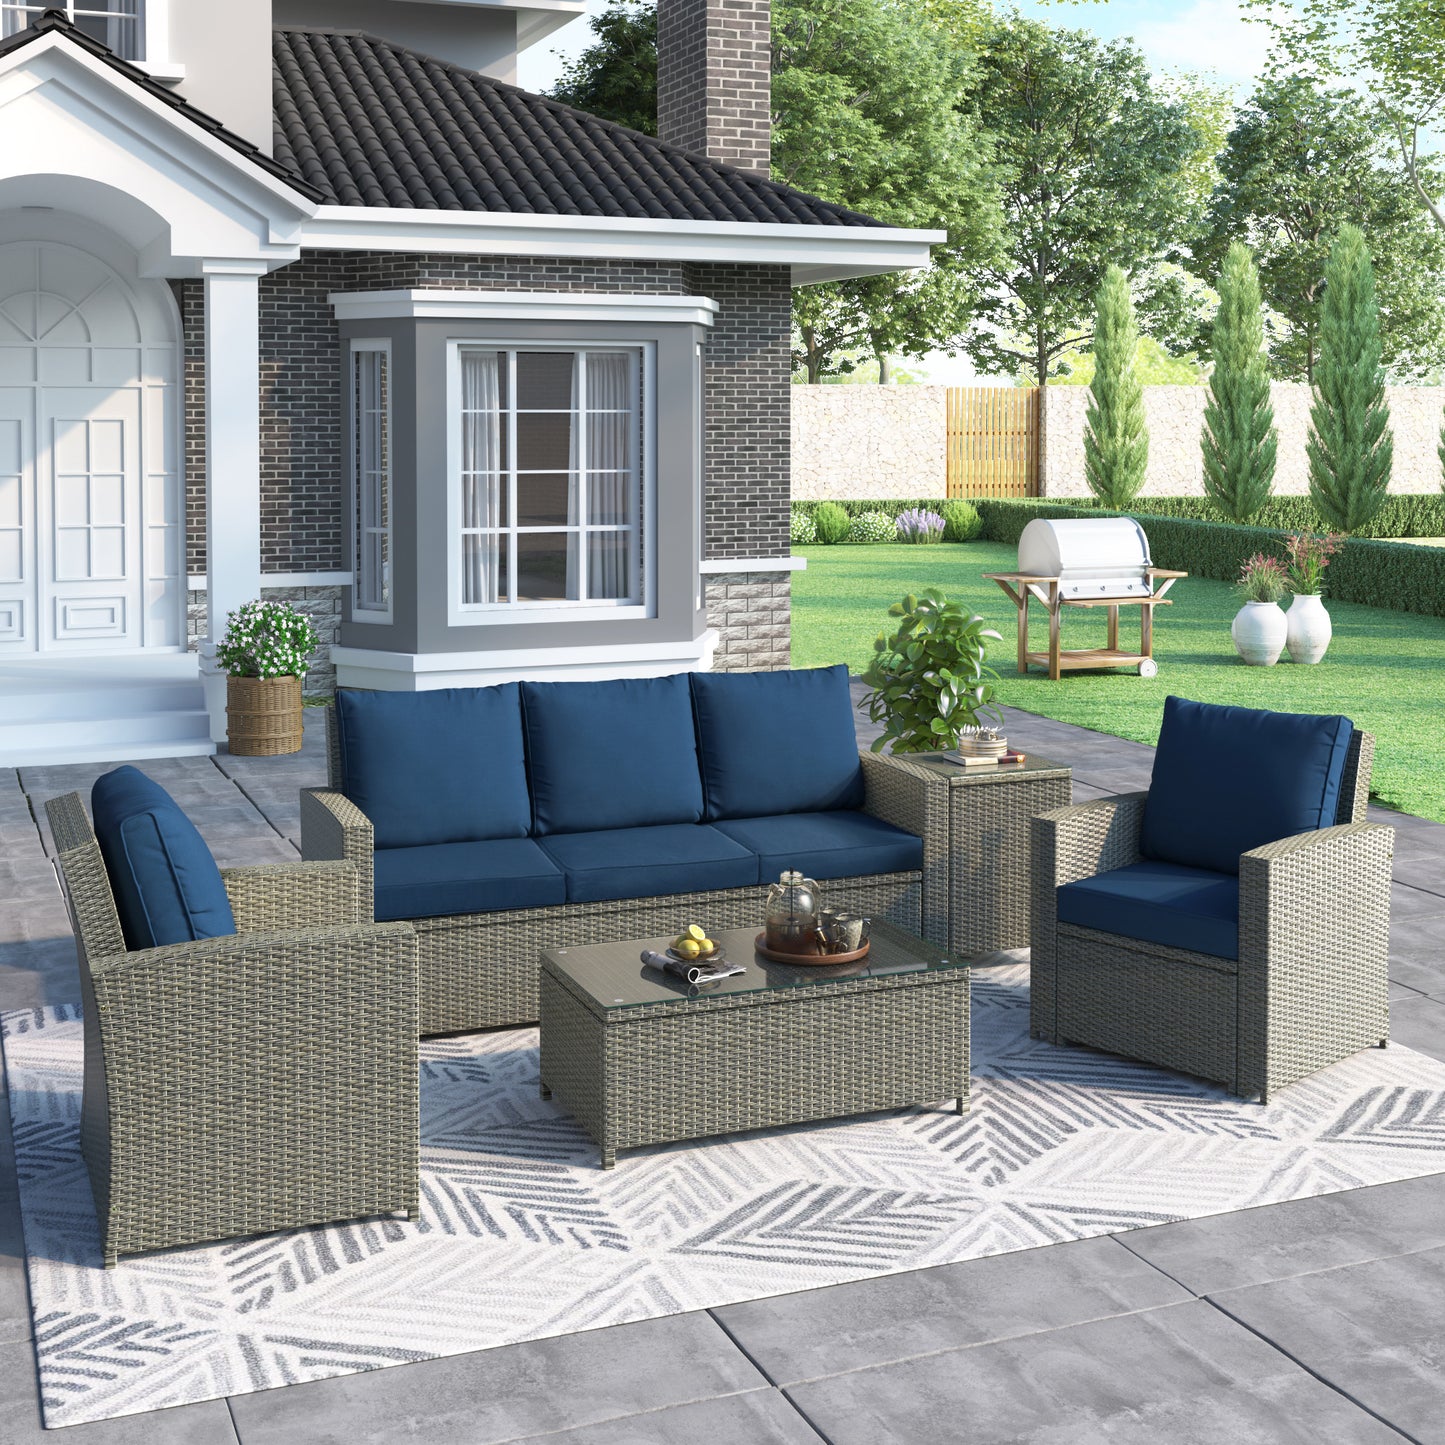 SYNGAR Outdoor Furniture Set, 5 Pieces Patio PE Rattan Wicker Furniture Sofa Set Outdoor Indoor Furniture Set for Backyard Lawn Garden Deck, Blue